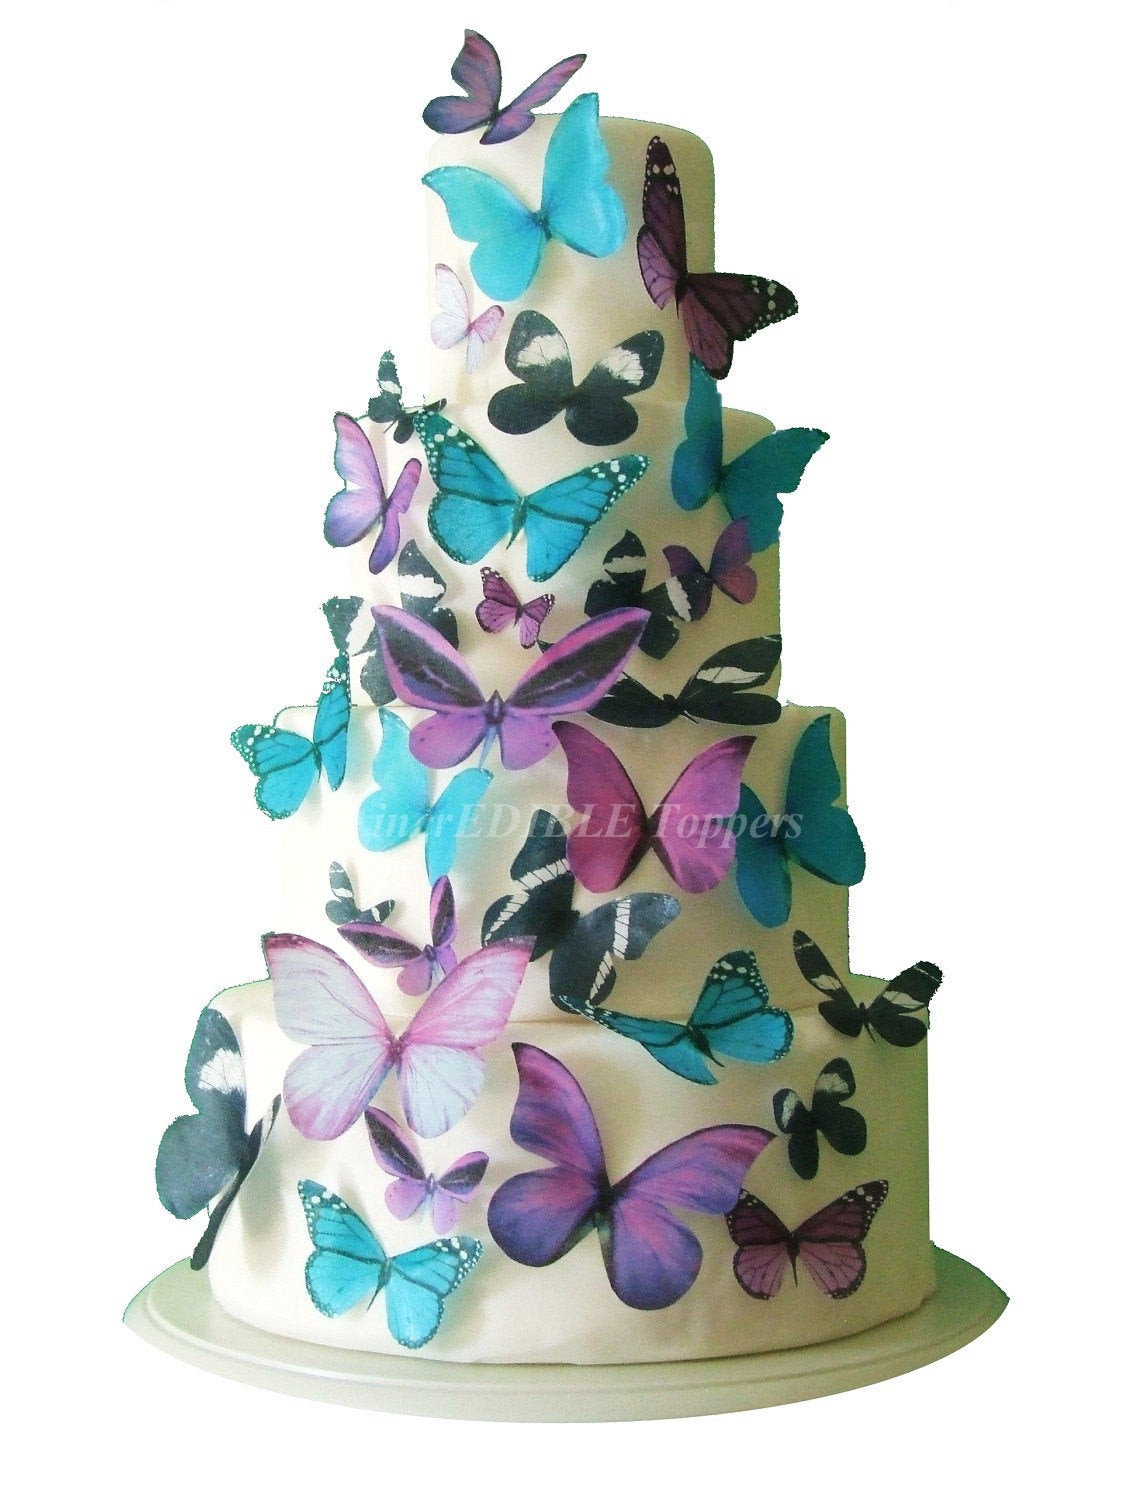 Edible Birthday Cake Decorations
 EDIBLE BUTTERFLIES for Cakes and Cupcakes Cake Decorations